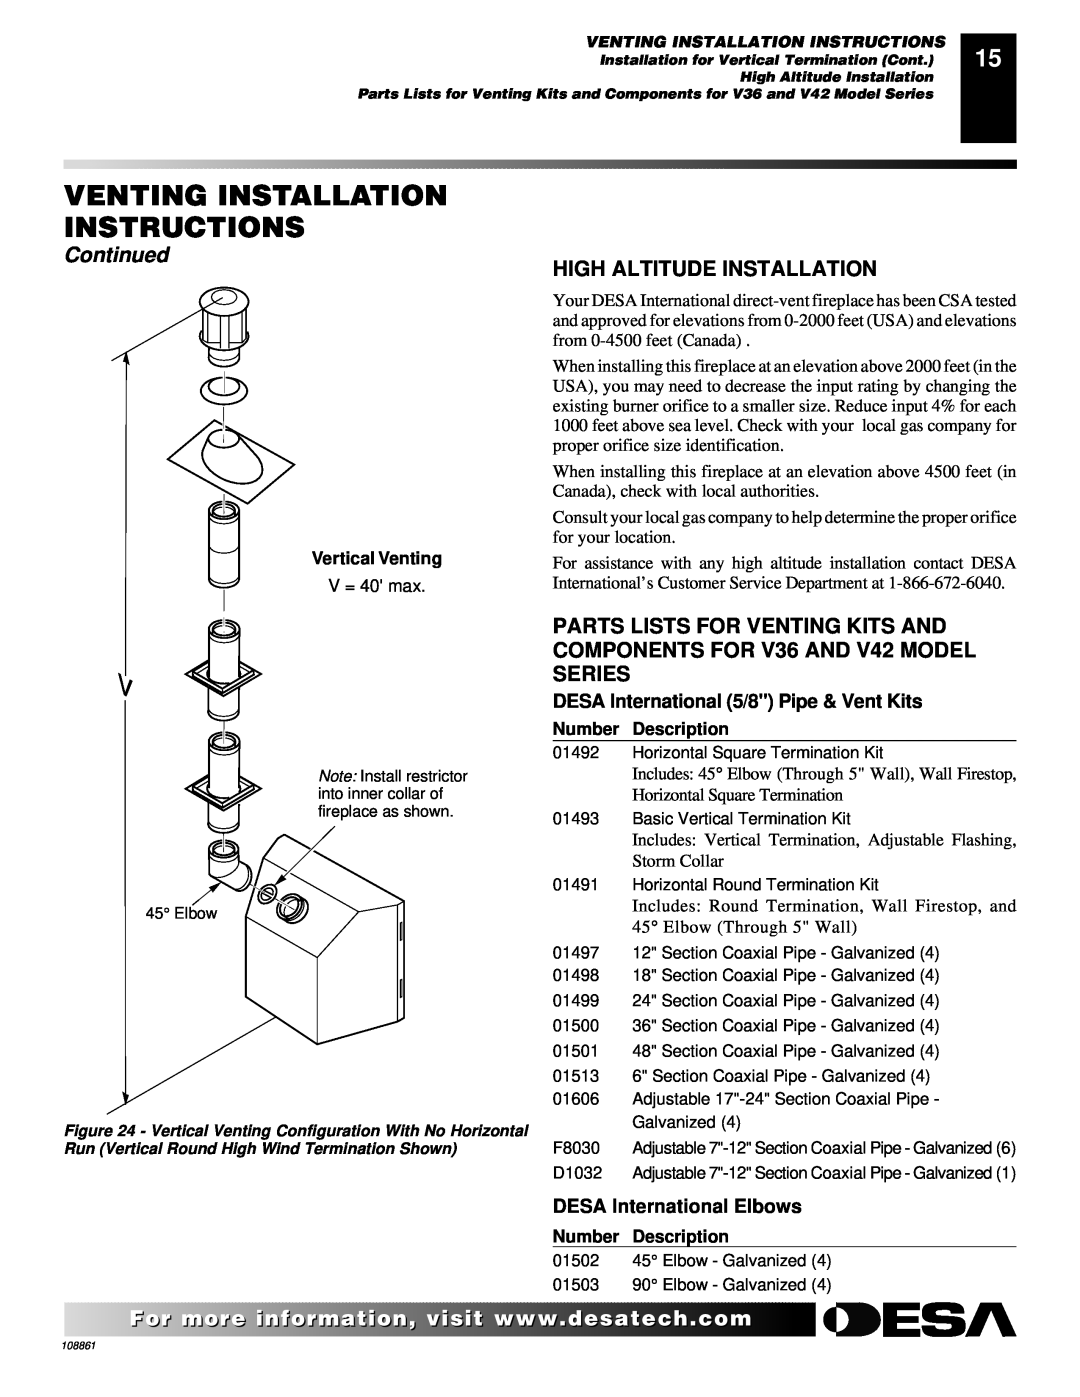 Desa (V)V36N High Altitude Installation, DESA International 5/8 Pipe & Vent Kits, DESA International Elbows, Continued 